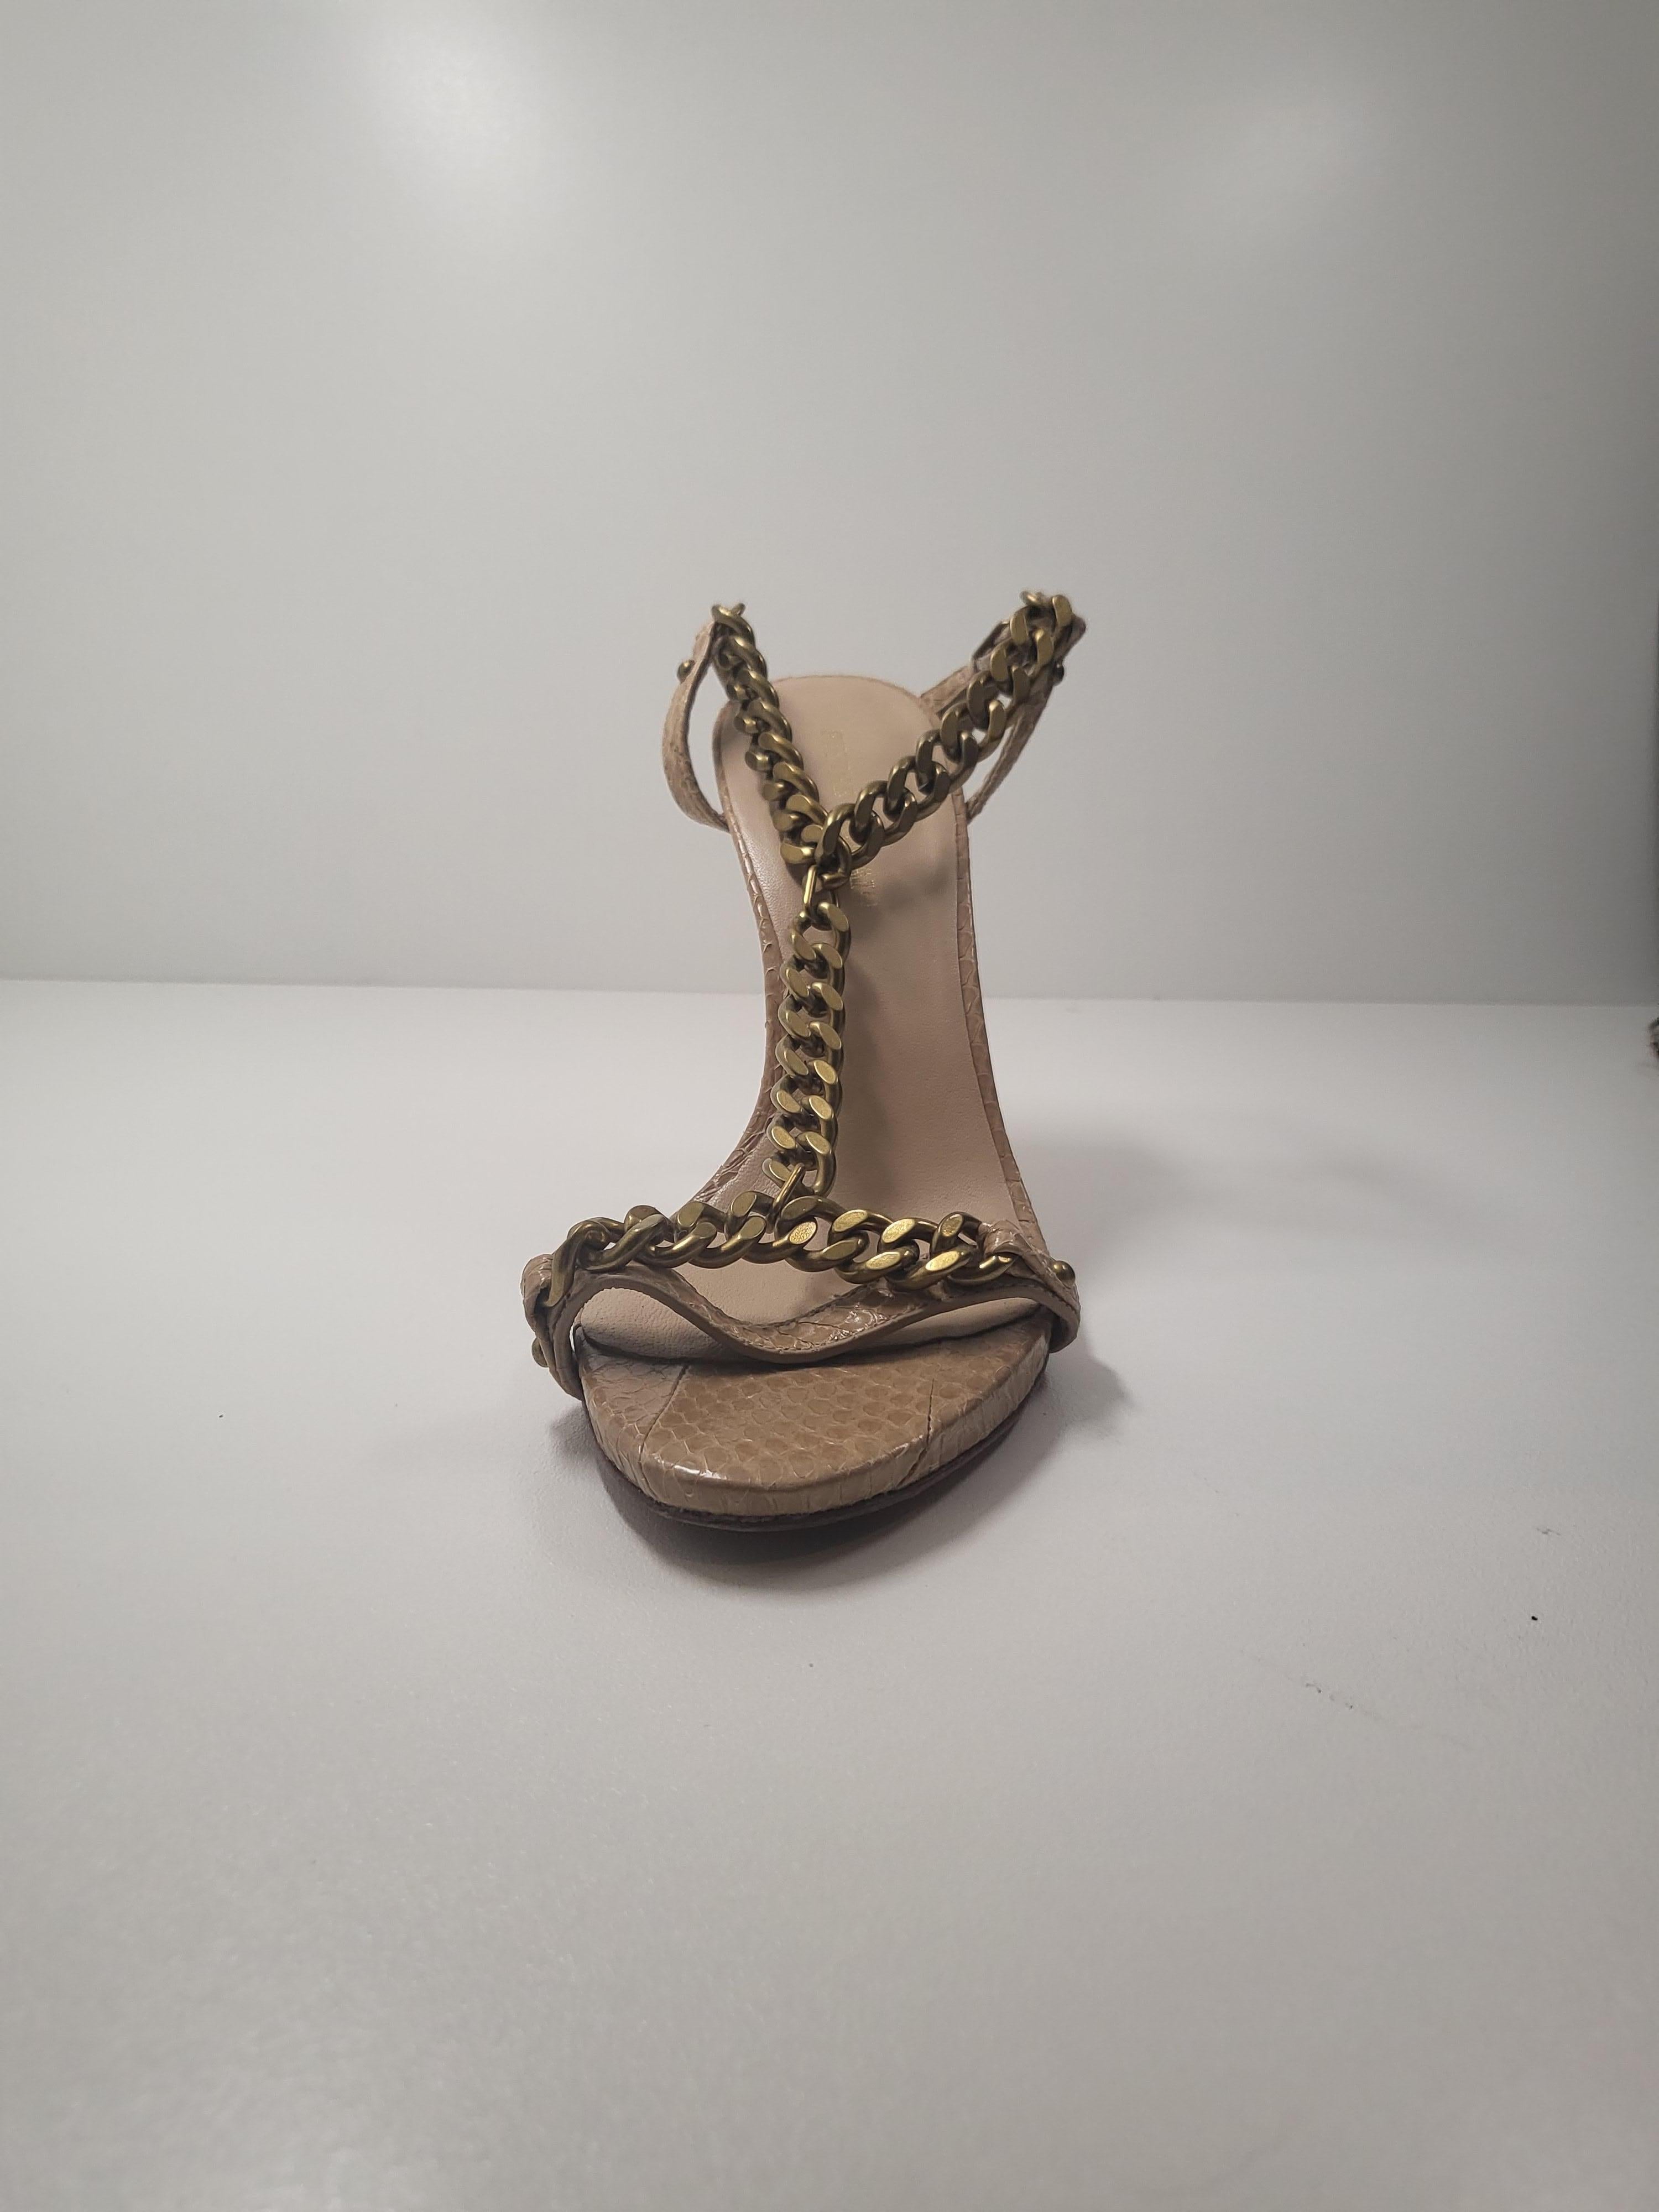 Pierre Balmain Snakeskin Leather Beige Nude High Heel Mule Sandals 36 For Sale 2